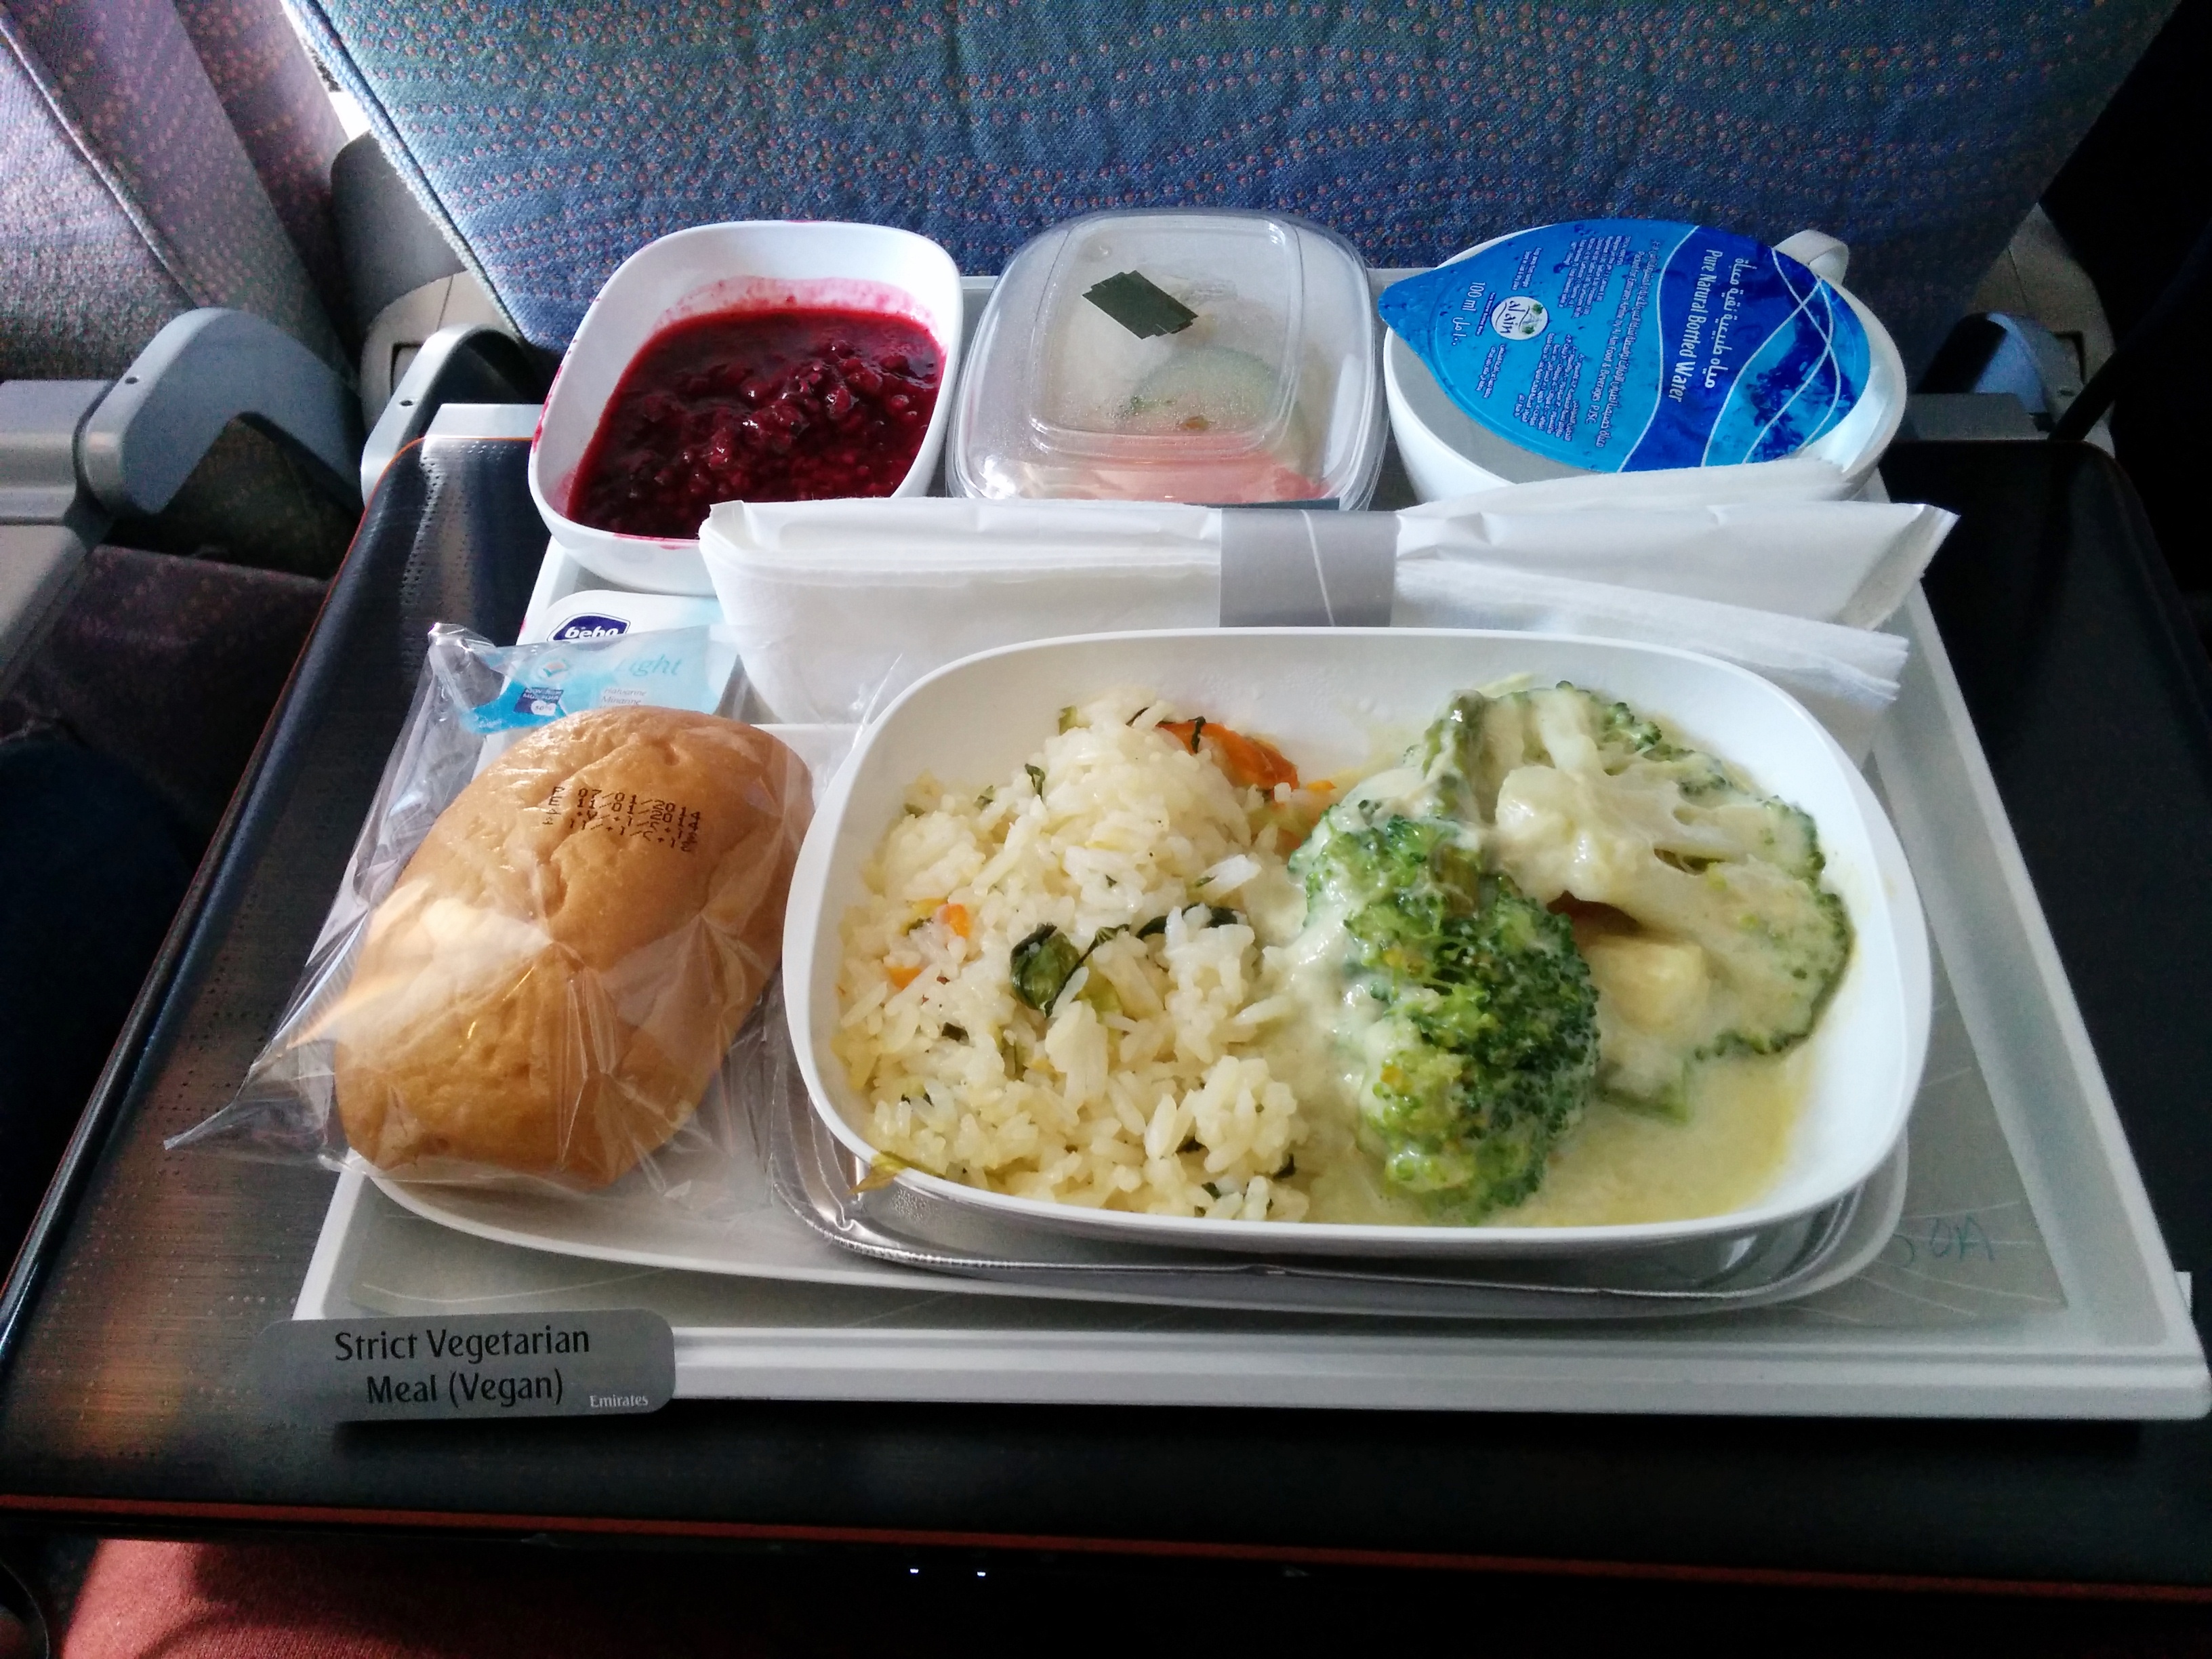  "strict vegetarian" vegane Mahlzeit bei Emirates Flug